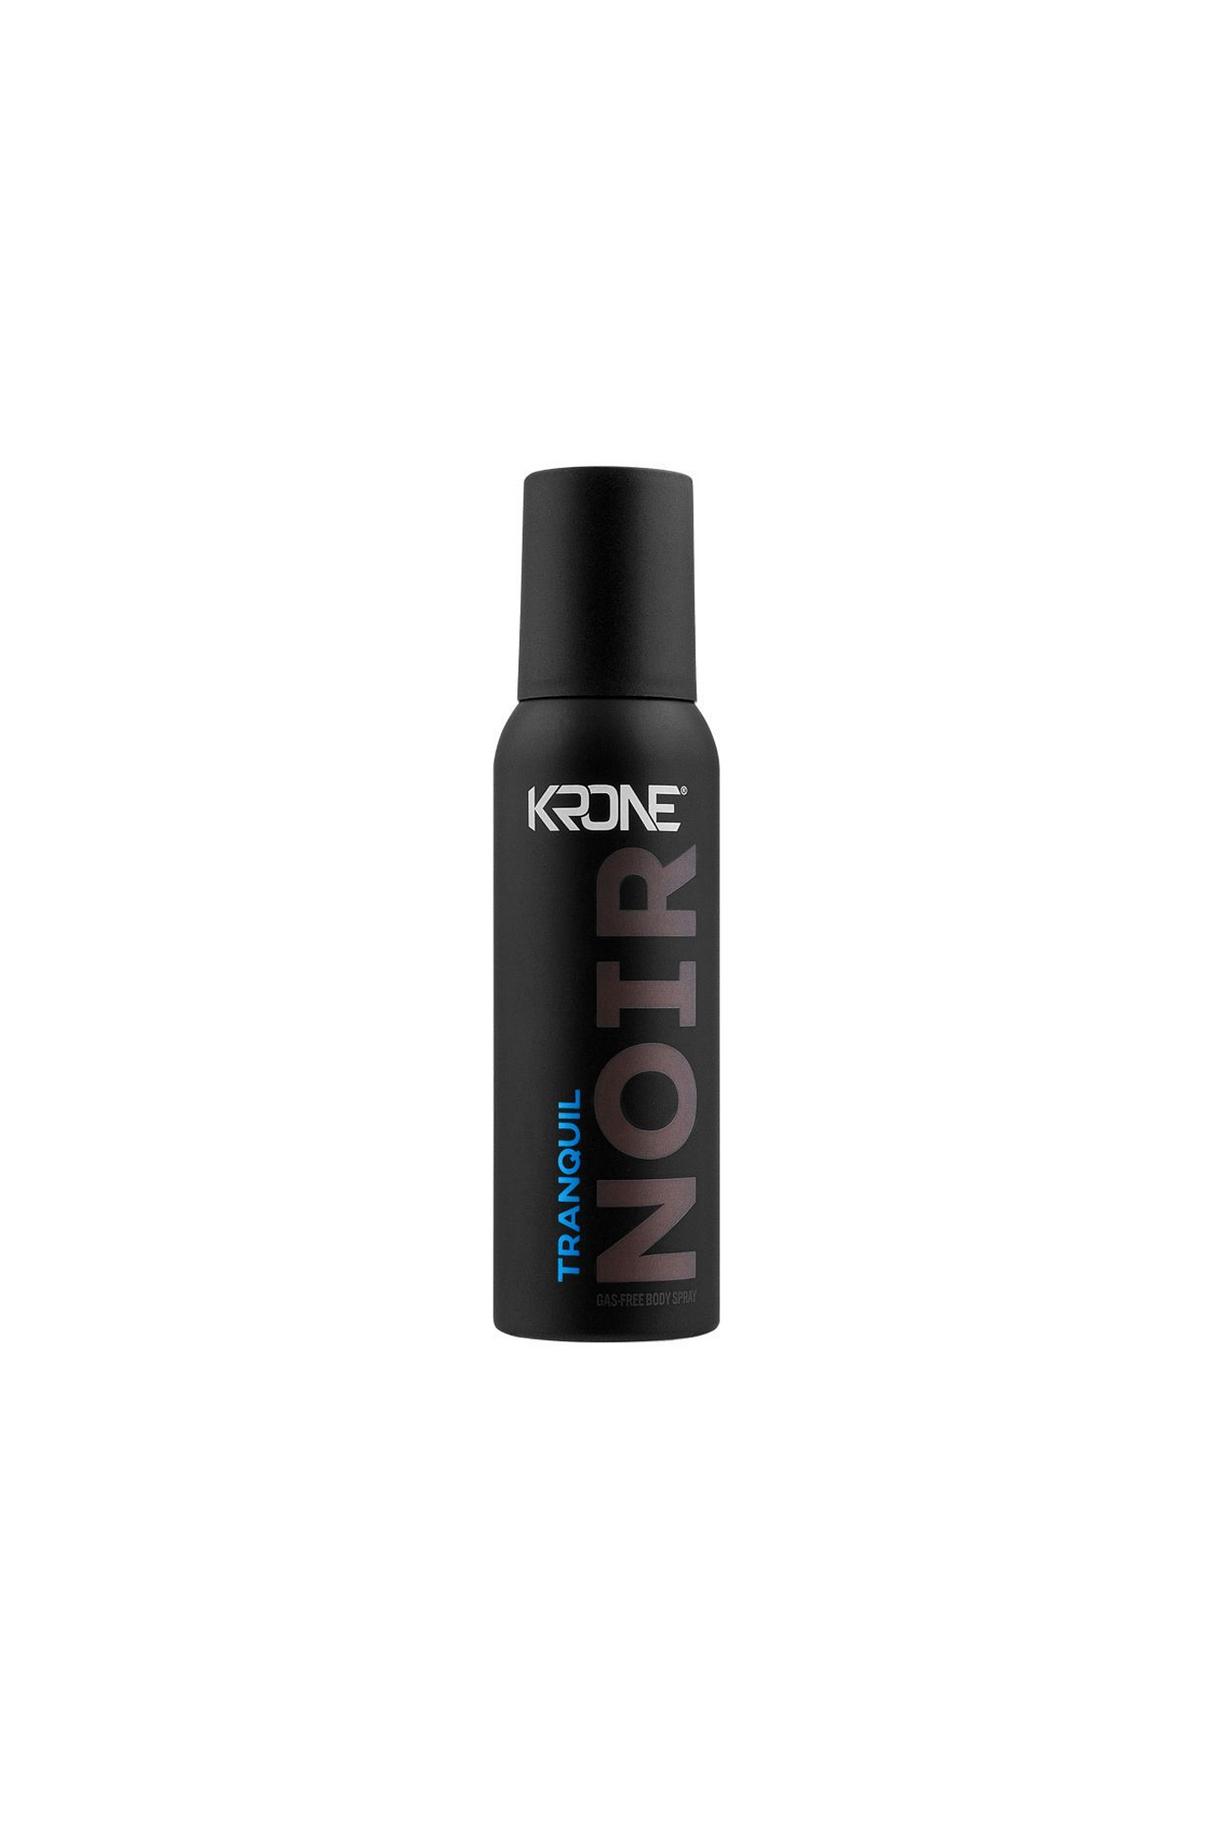 krone noir body spray tranquil 120ml